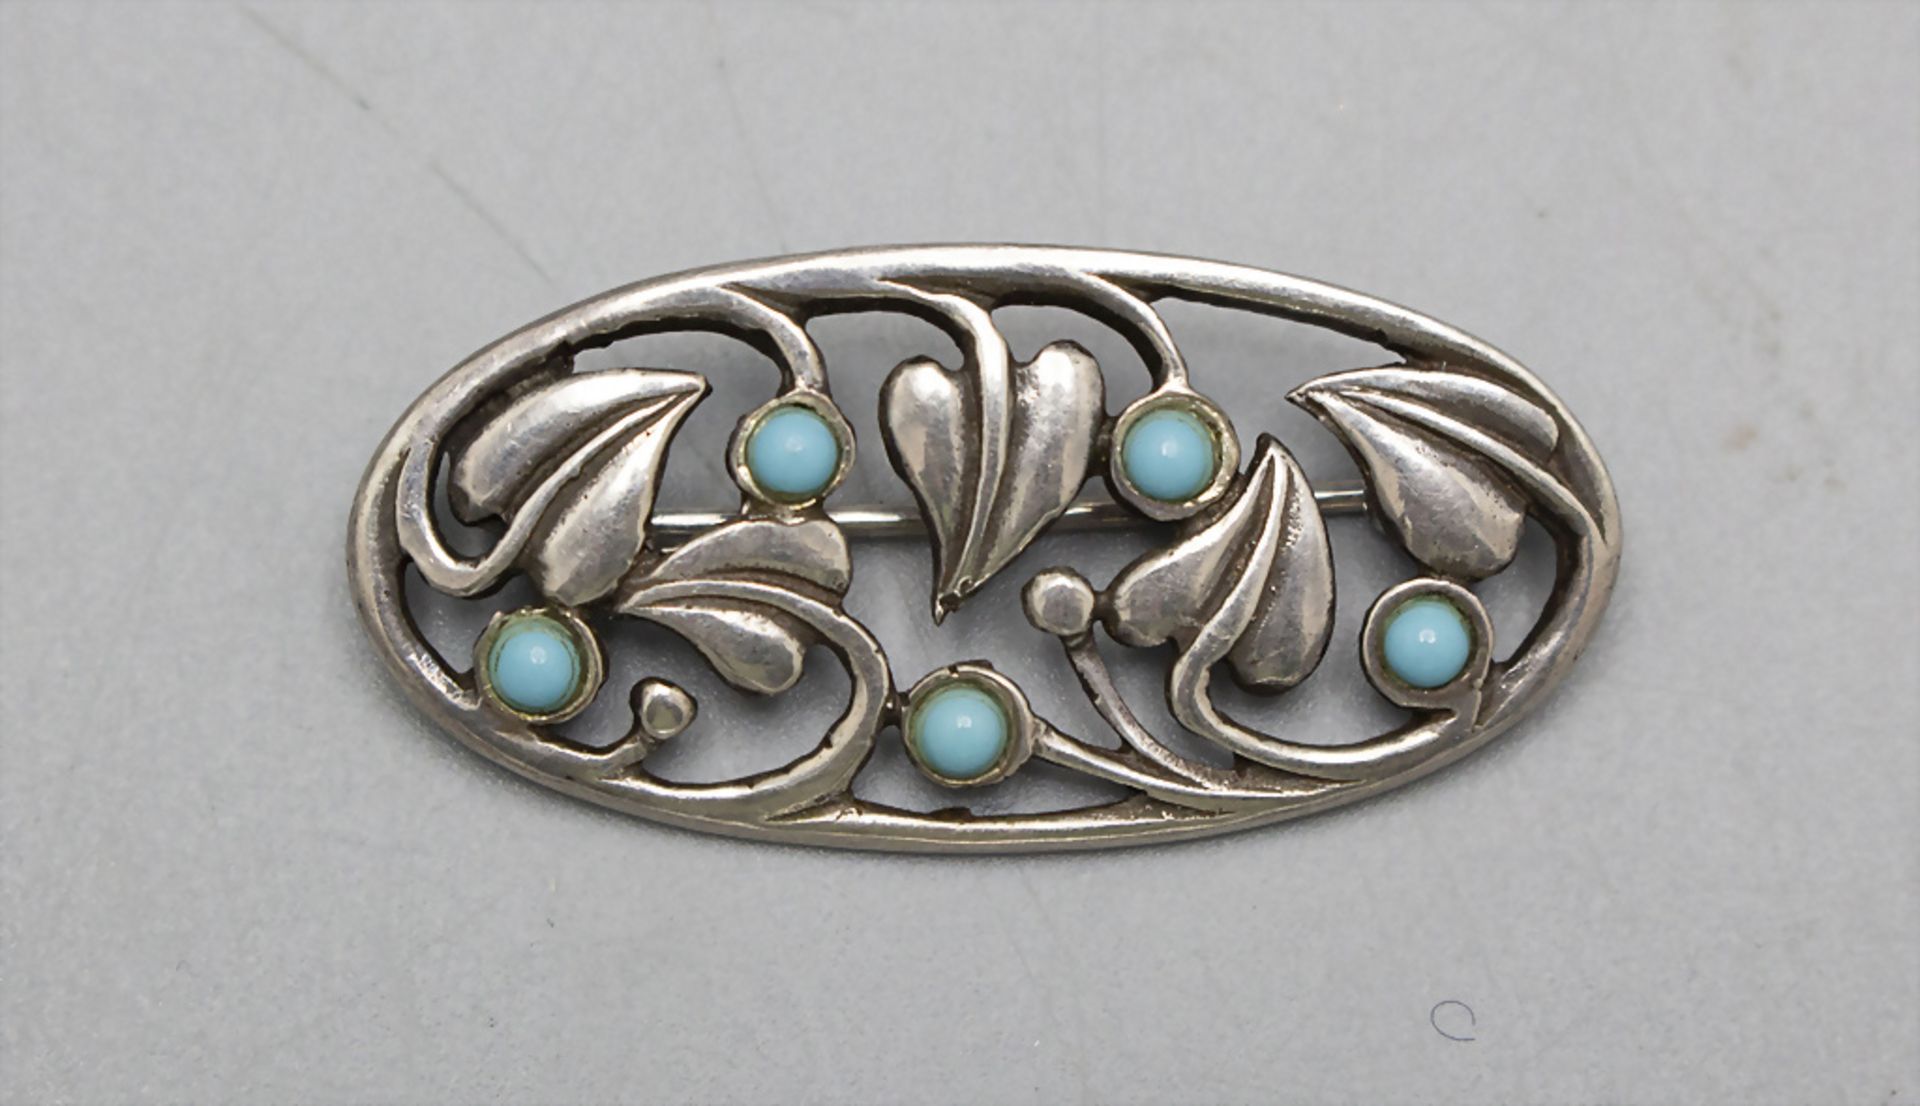 Jugendstil Brosche mit Efeu Blattdekor / An Art Nouveau Sterling silver brooch with ivy ...